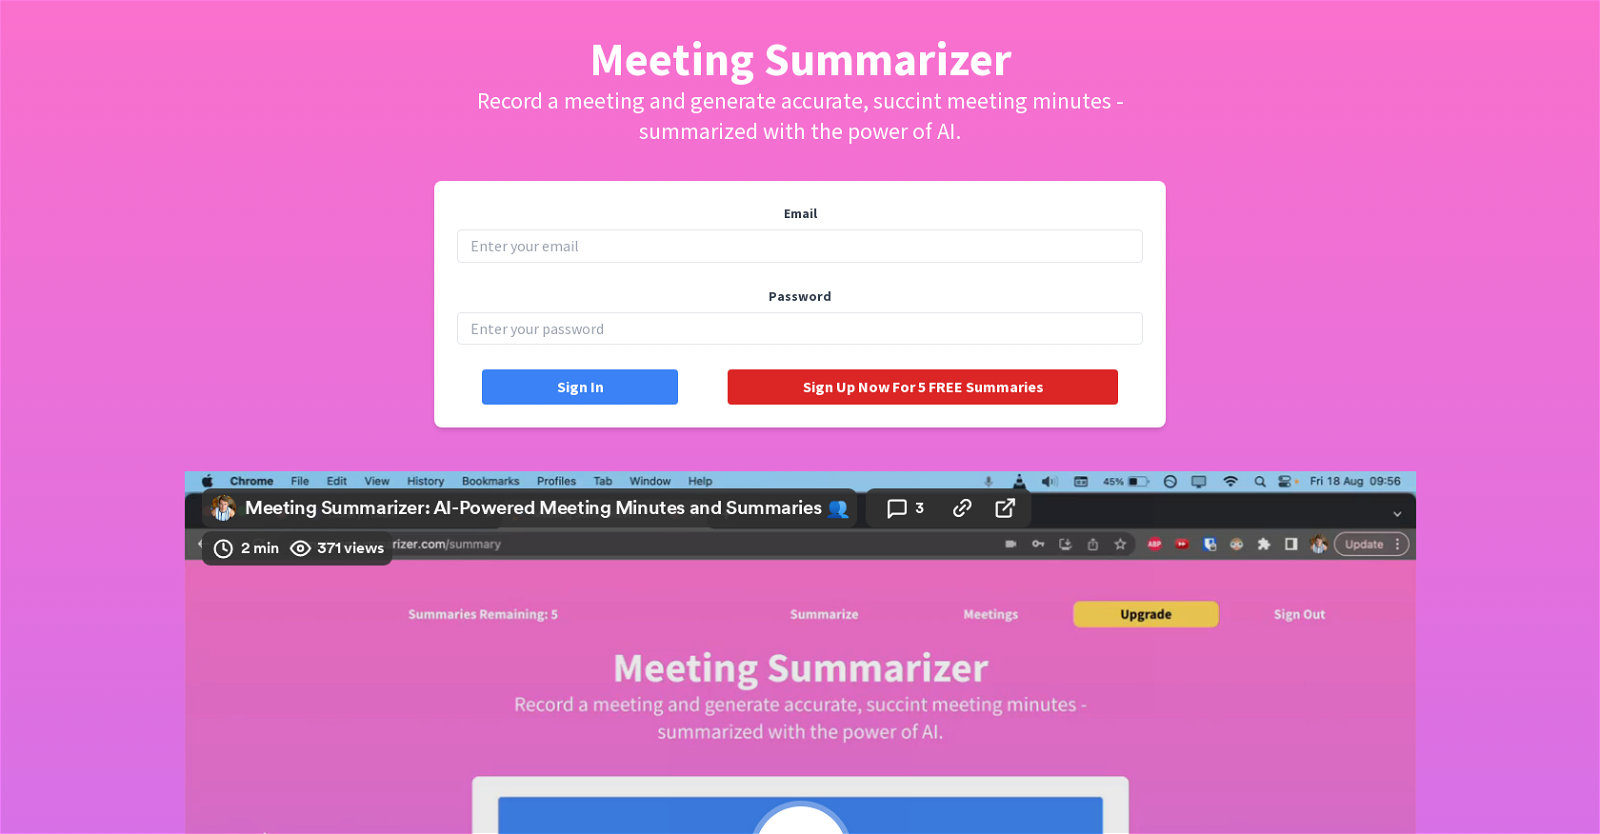 Meeting Summarizer website